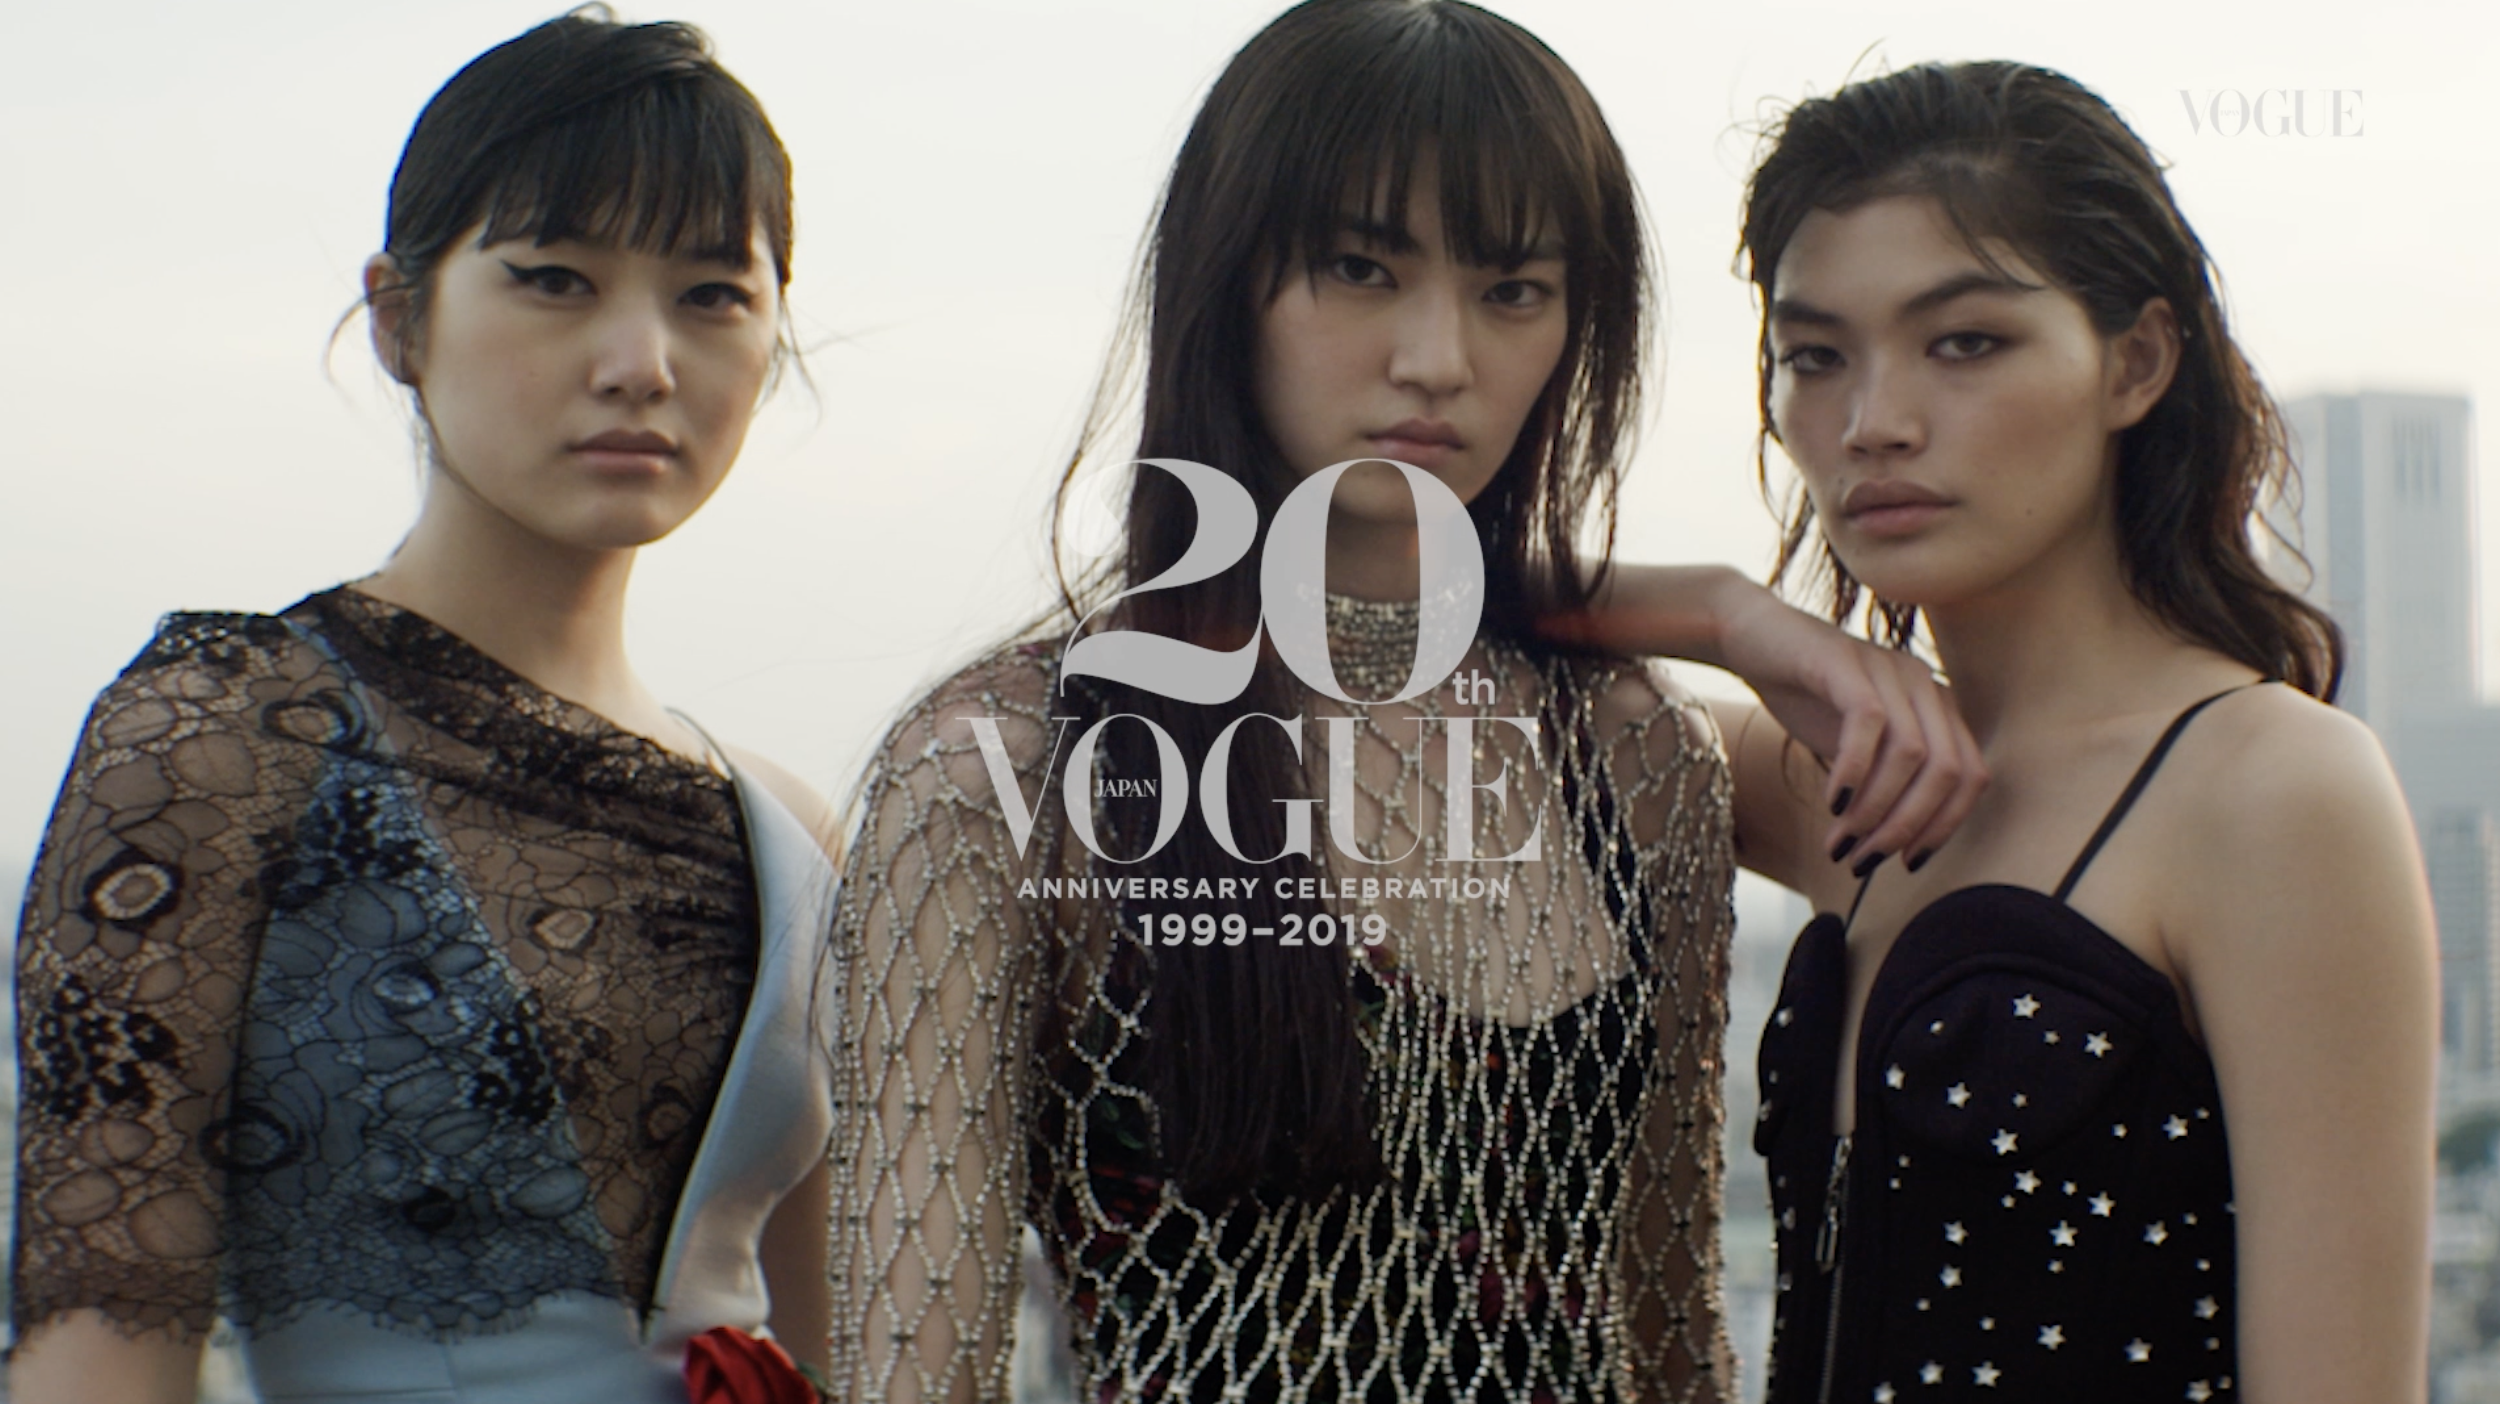 Vogue Japan「20th vogue Japan anniversary celebration 1999-2019」